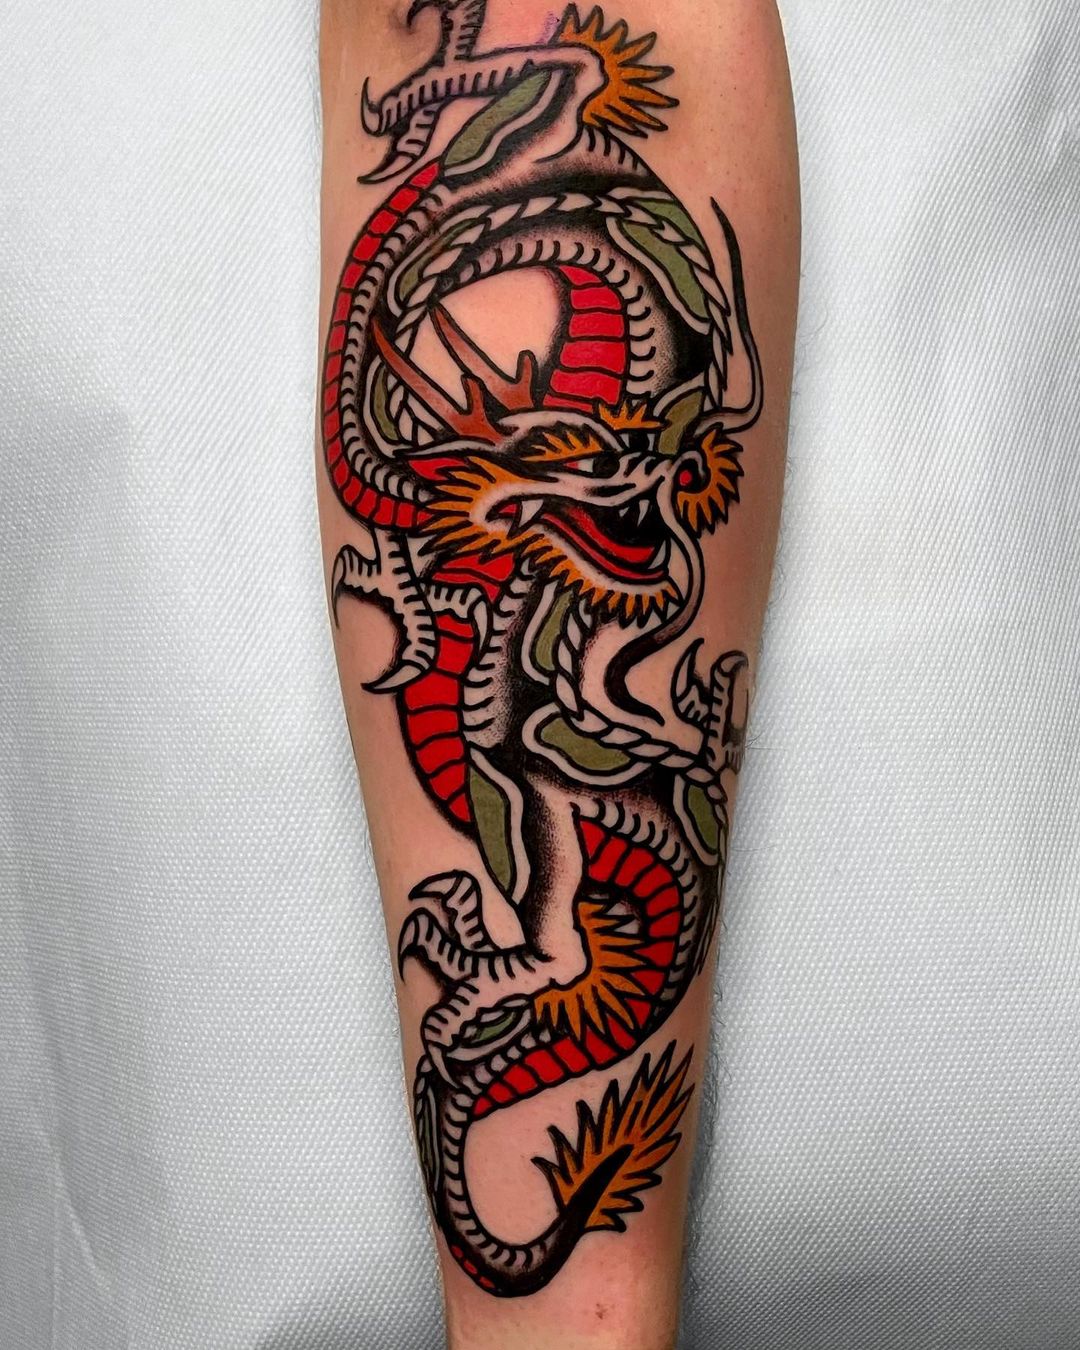 Traditional dragon tattoo by team fullgas